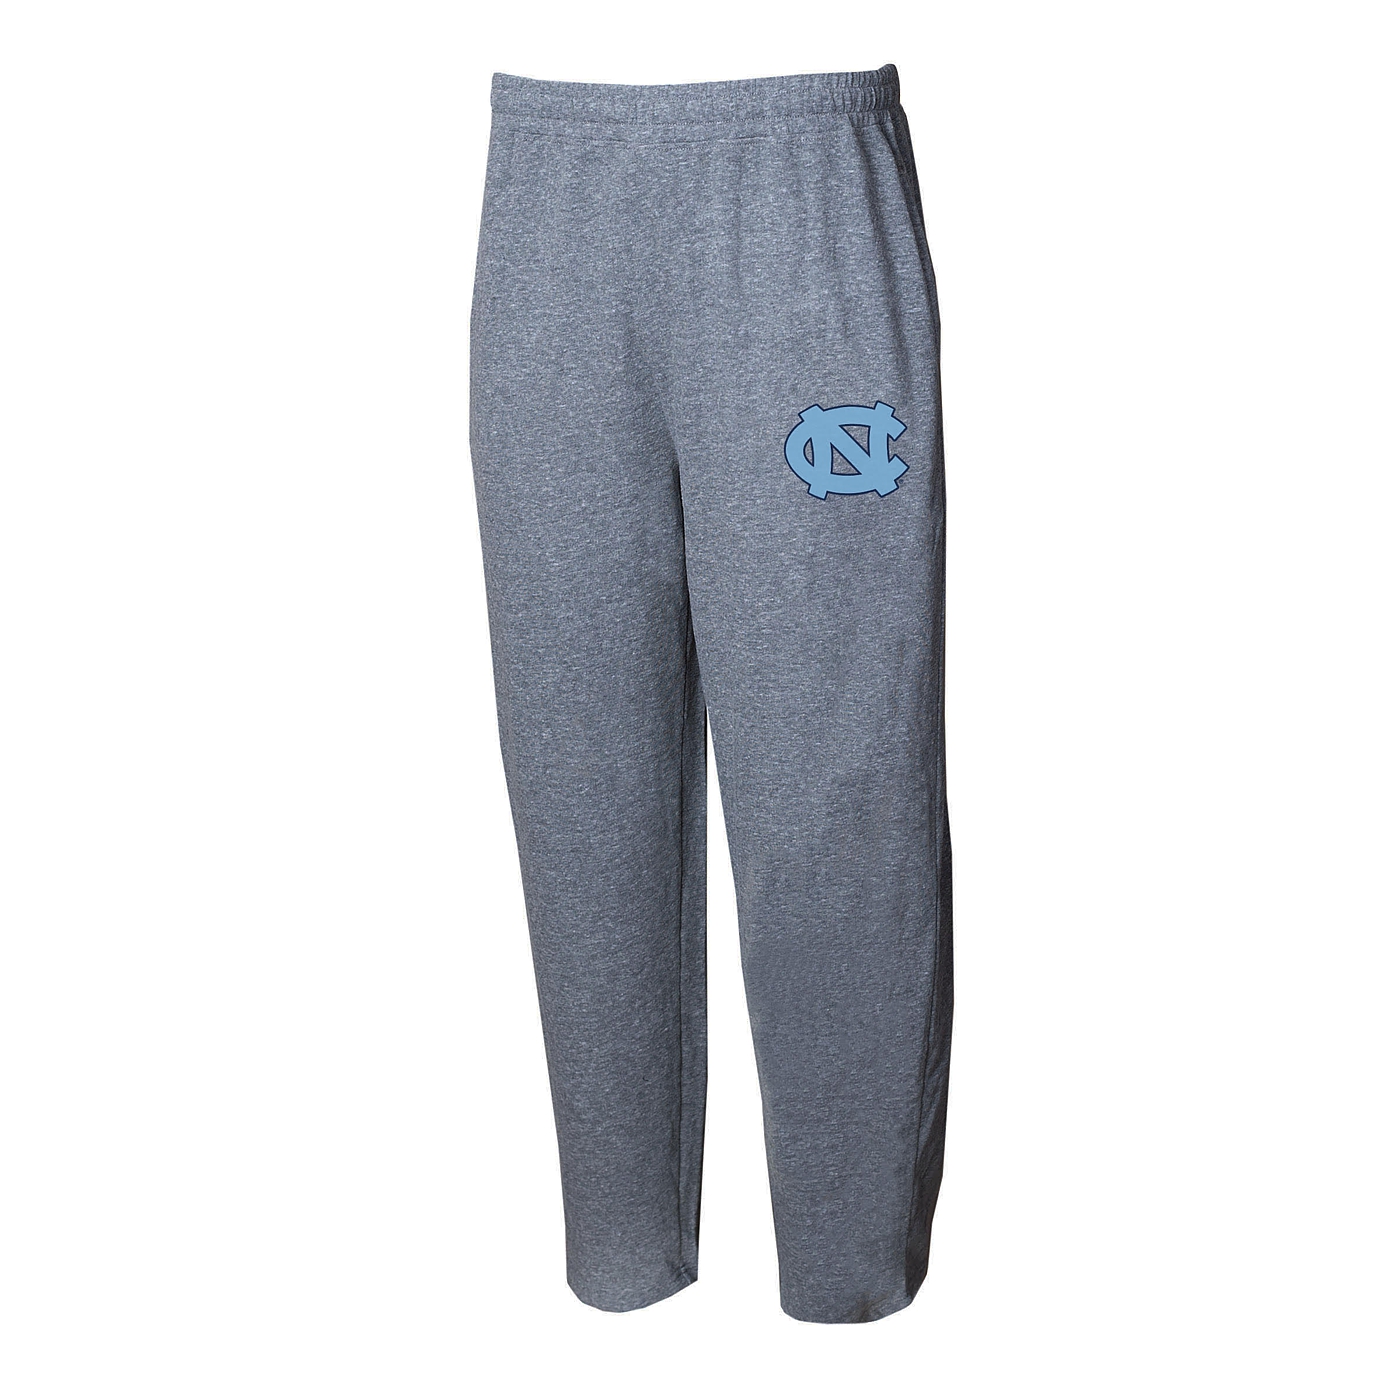 Johnny T-shirt - North Carolina Tar Heels - Mainstream Pants (Grey) by ...